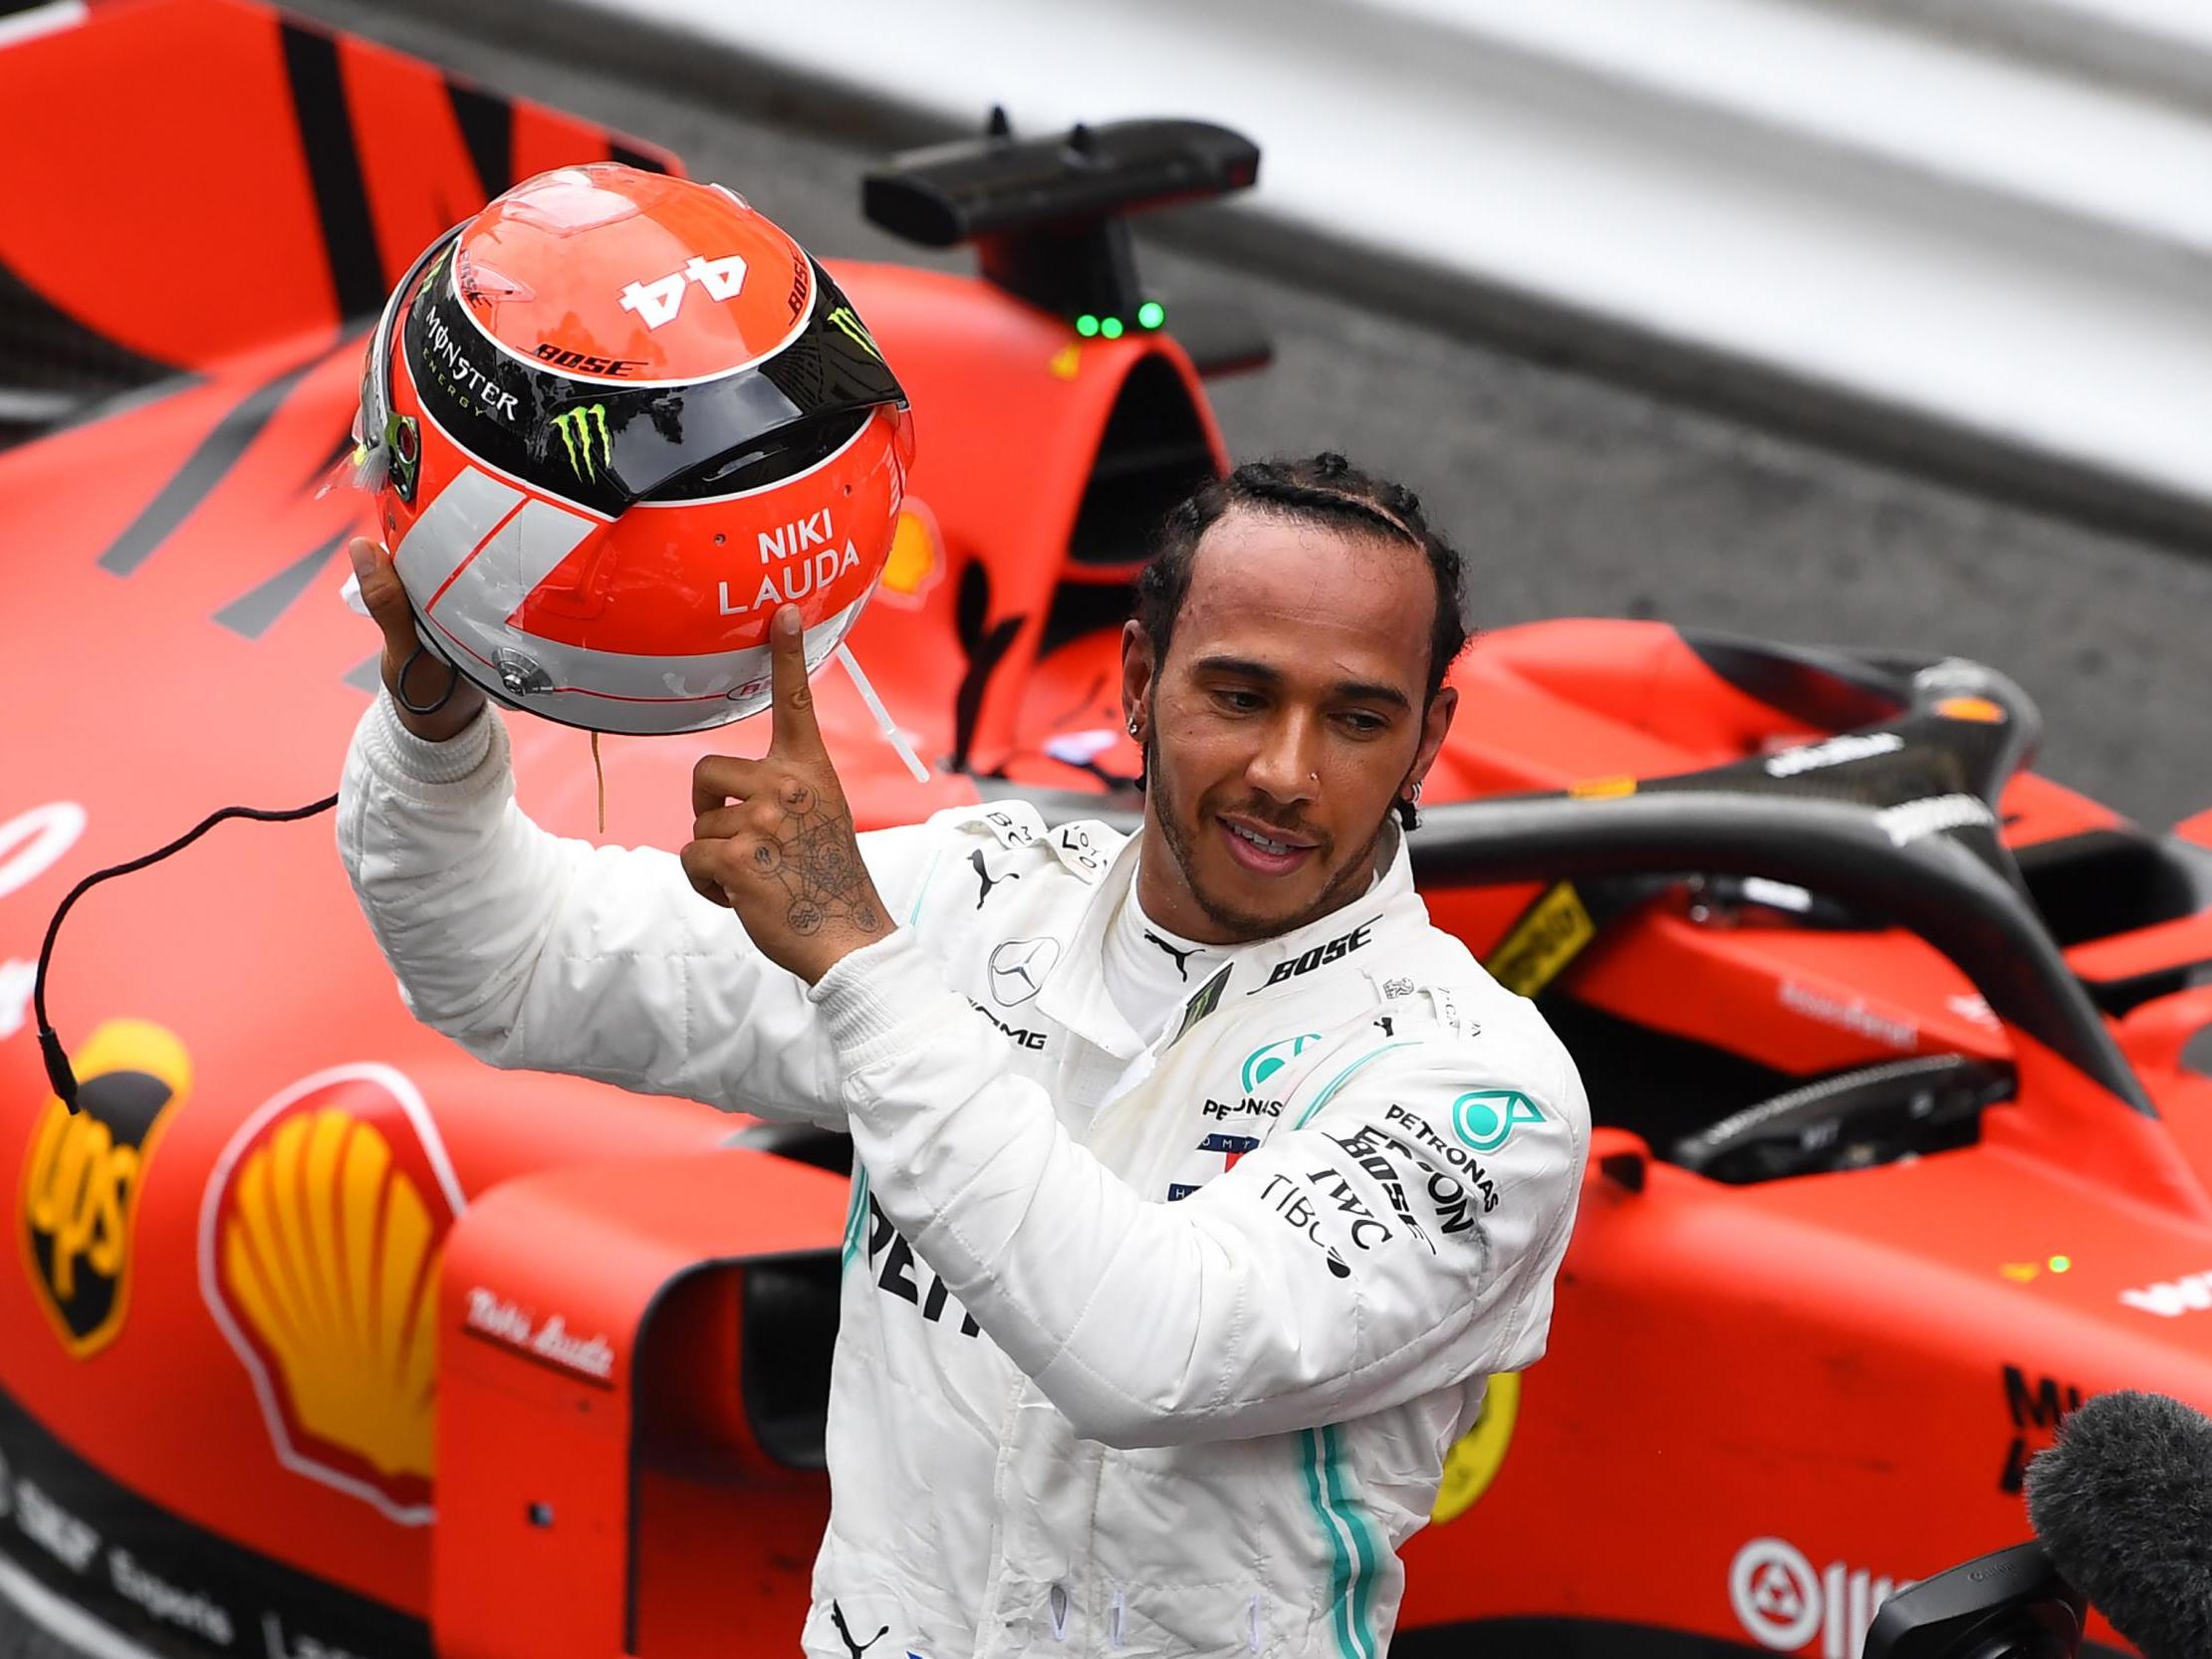 Lewis Hamilton paid tribute to Niki Lauda over the weekend